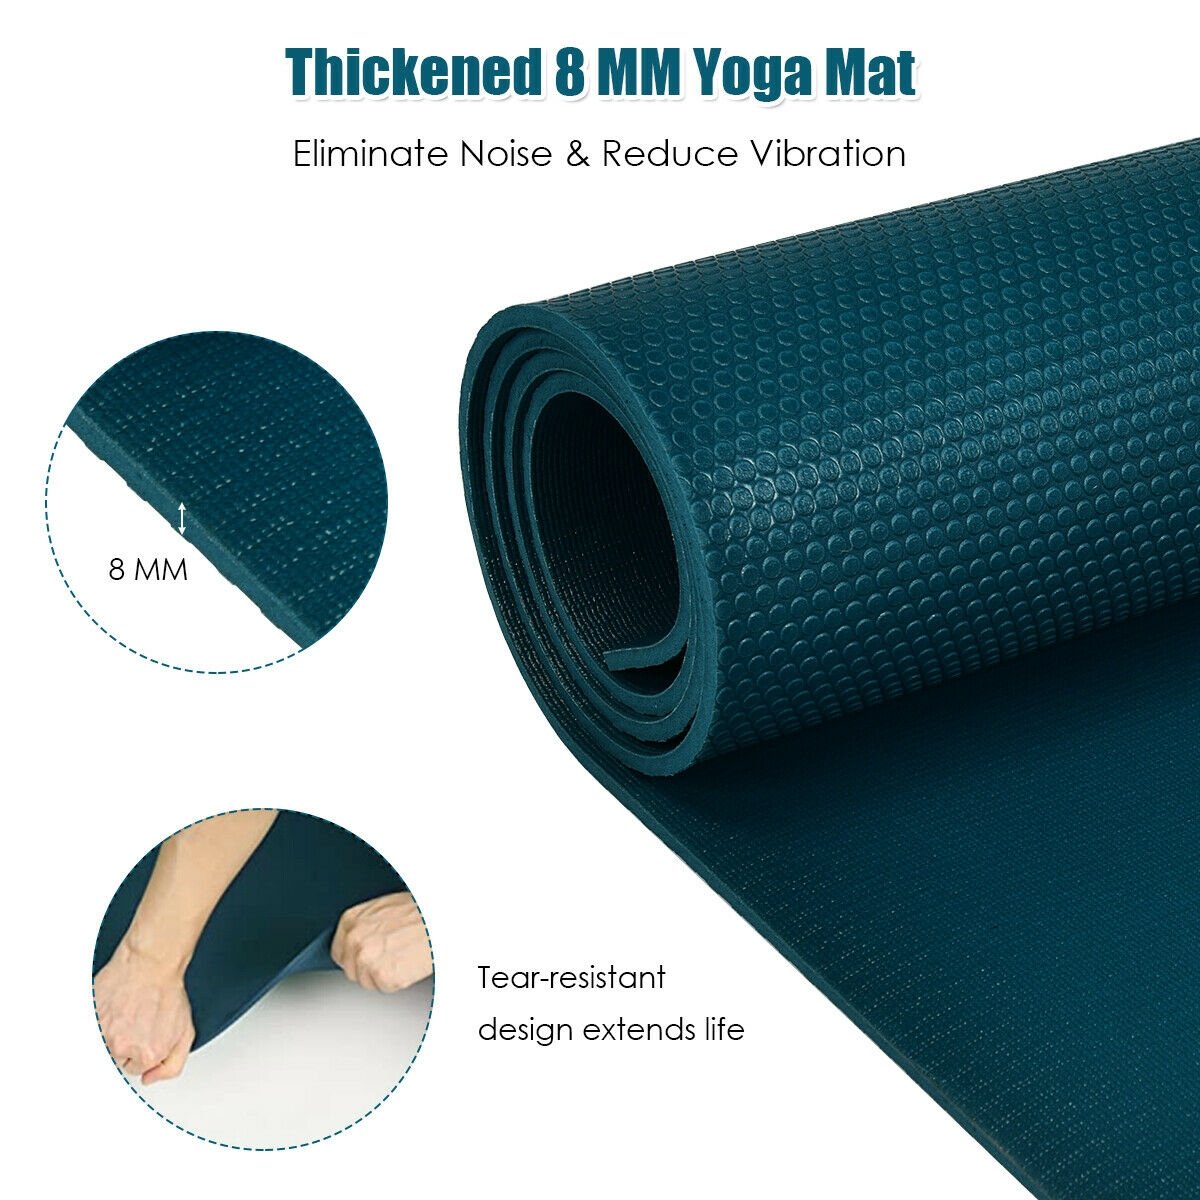 6 x 4 Feet Large Yoga Mat, Blue - Gallery Canada